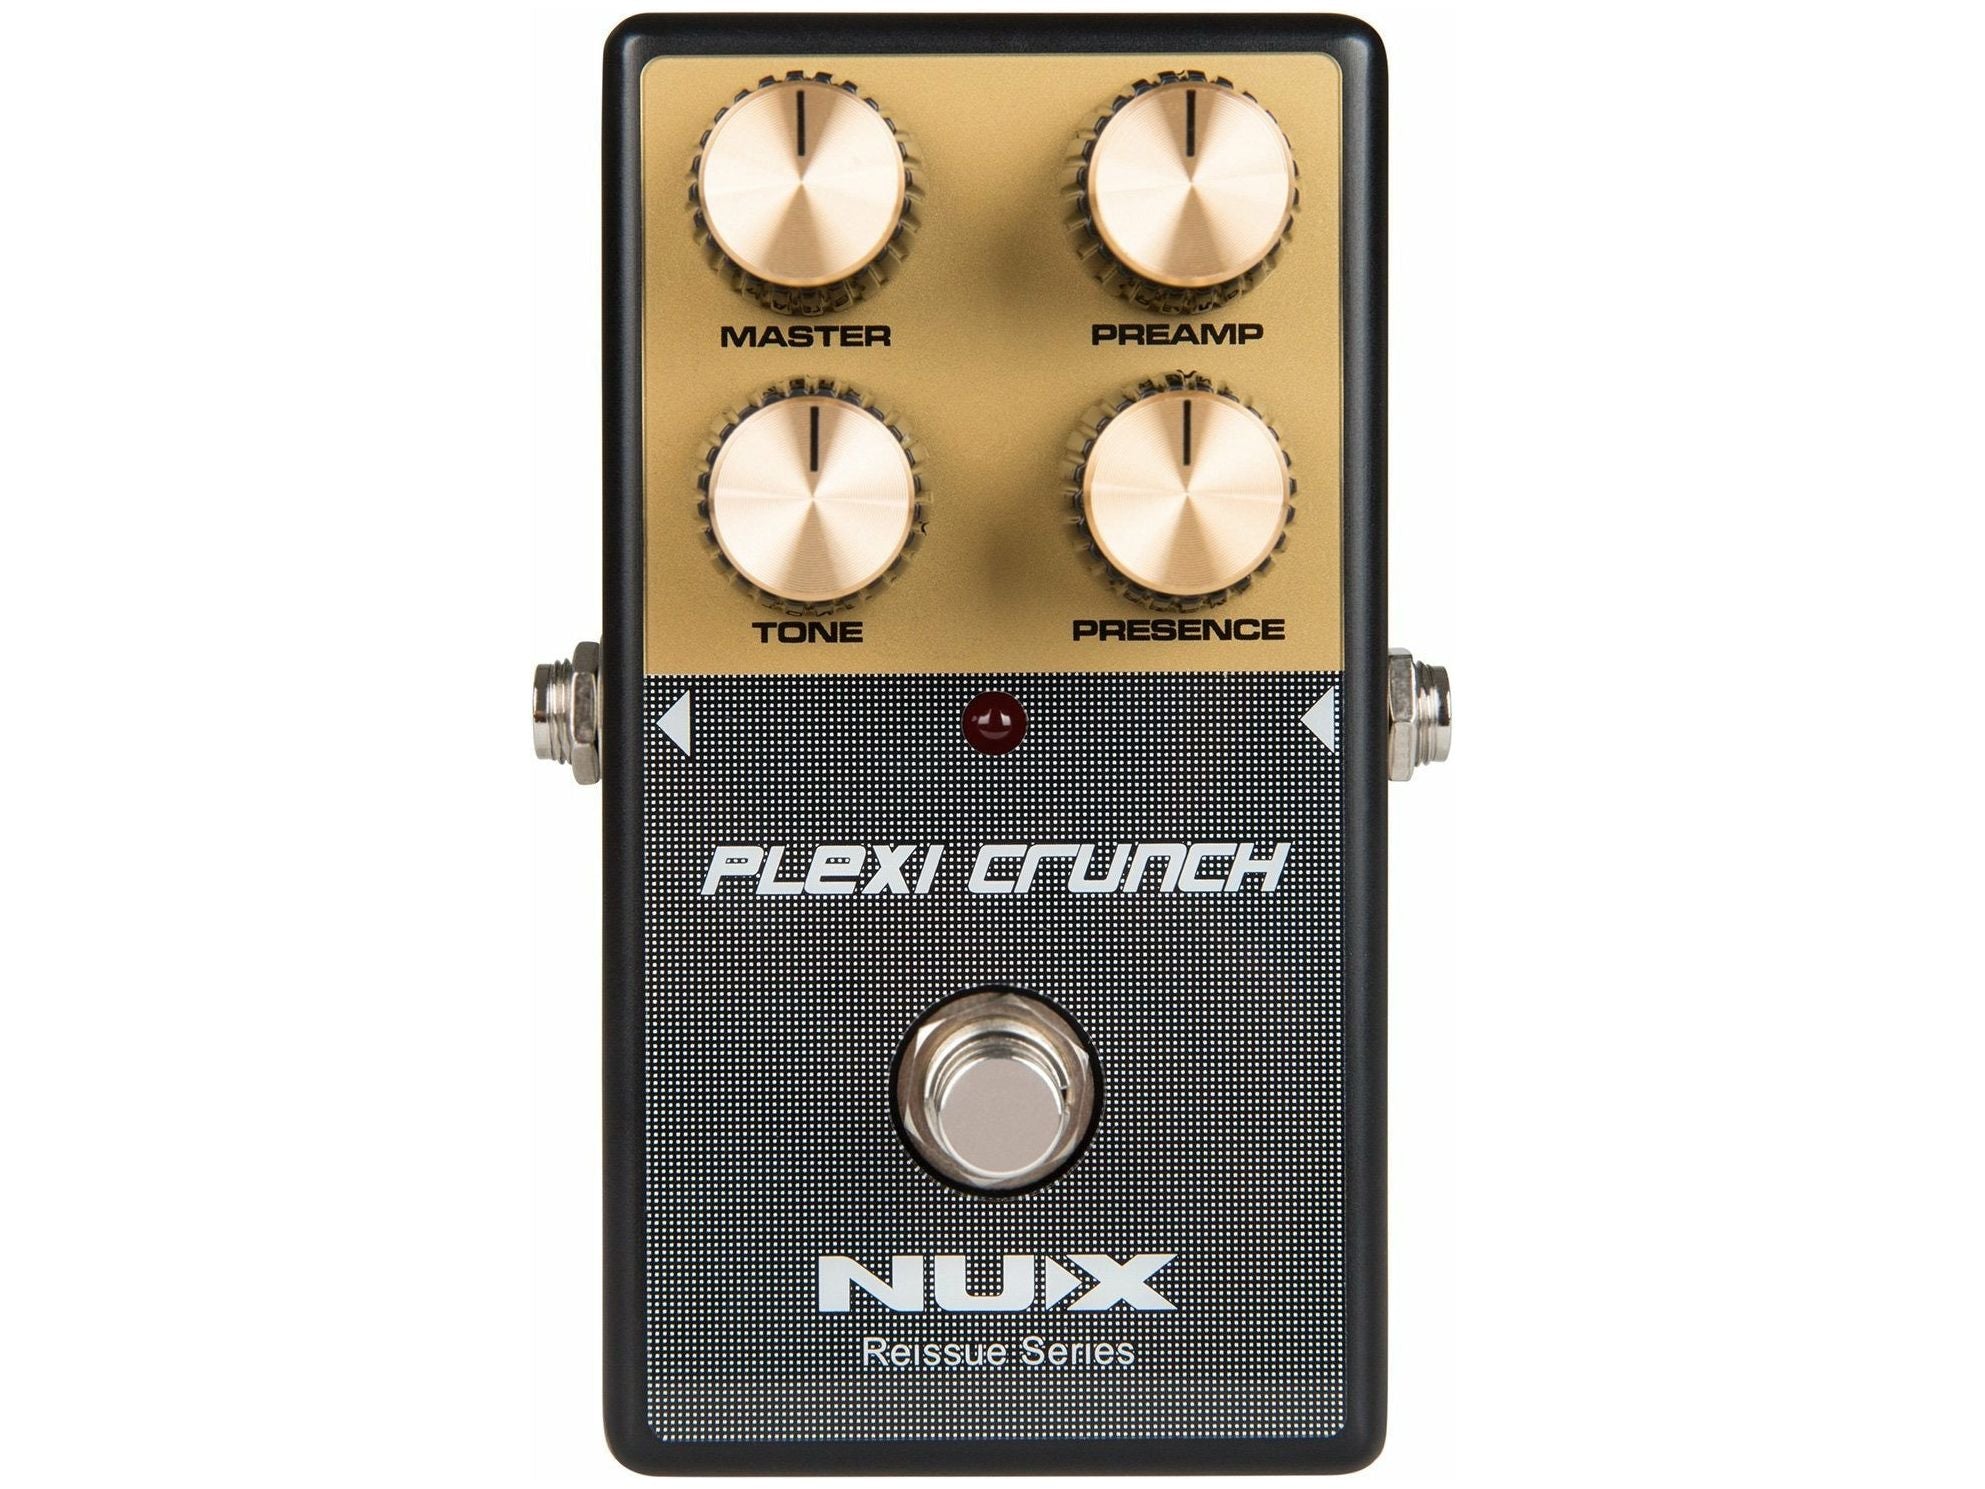 NuX Reissue Series Plexi Crunch Pedal